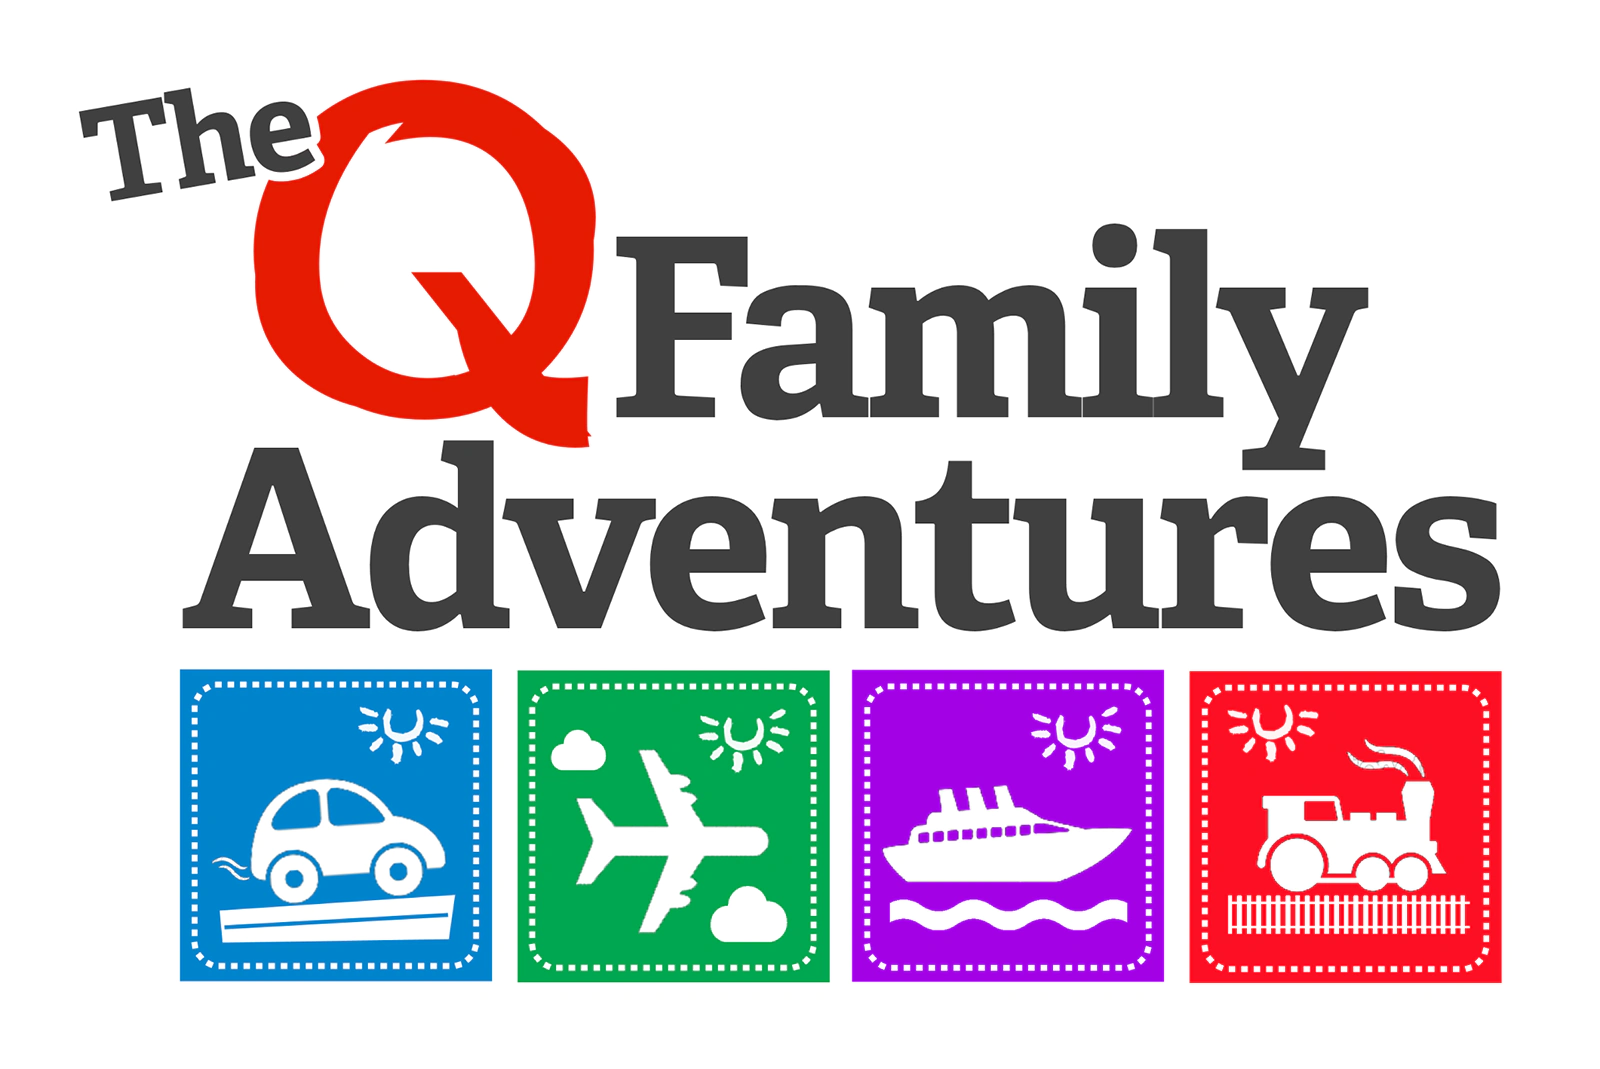 The Q Family Adventures